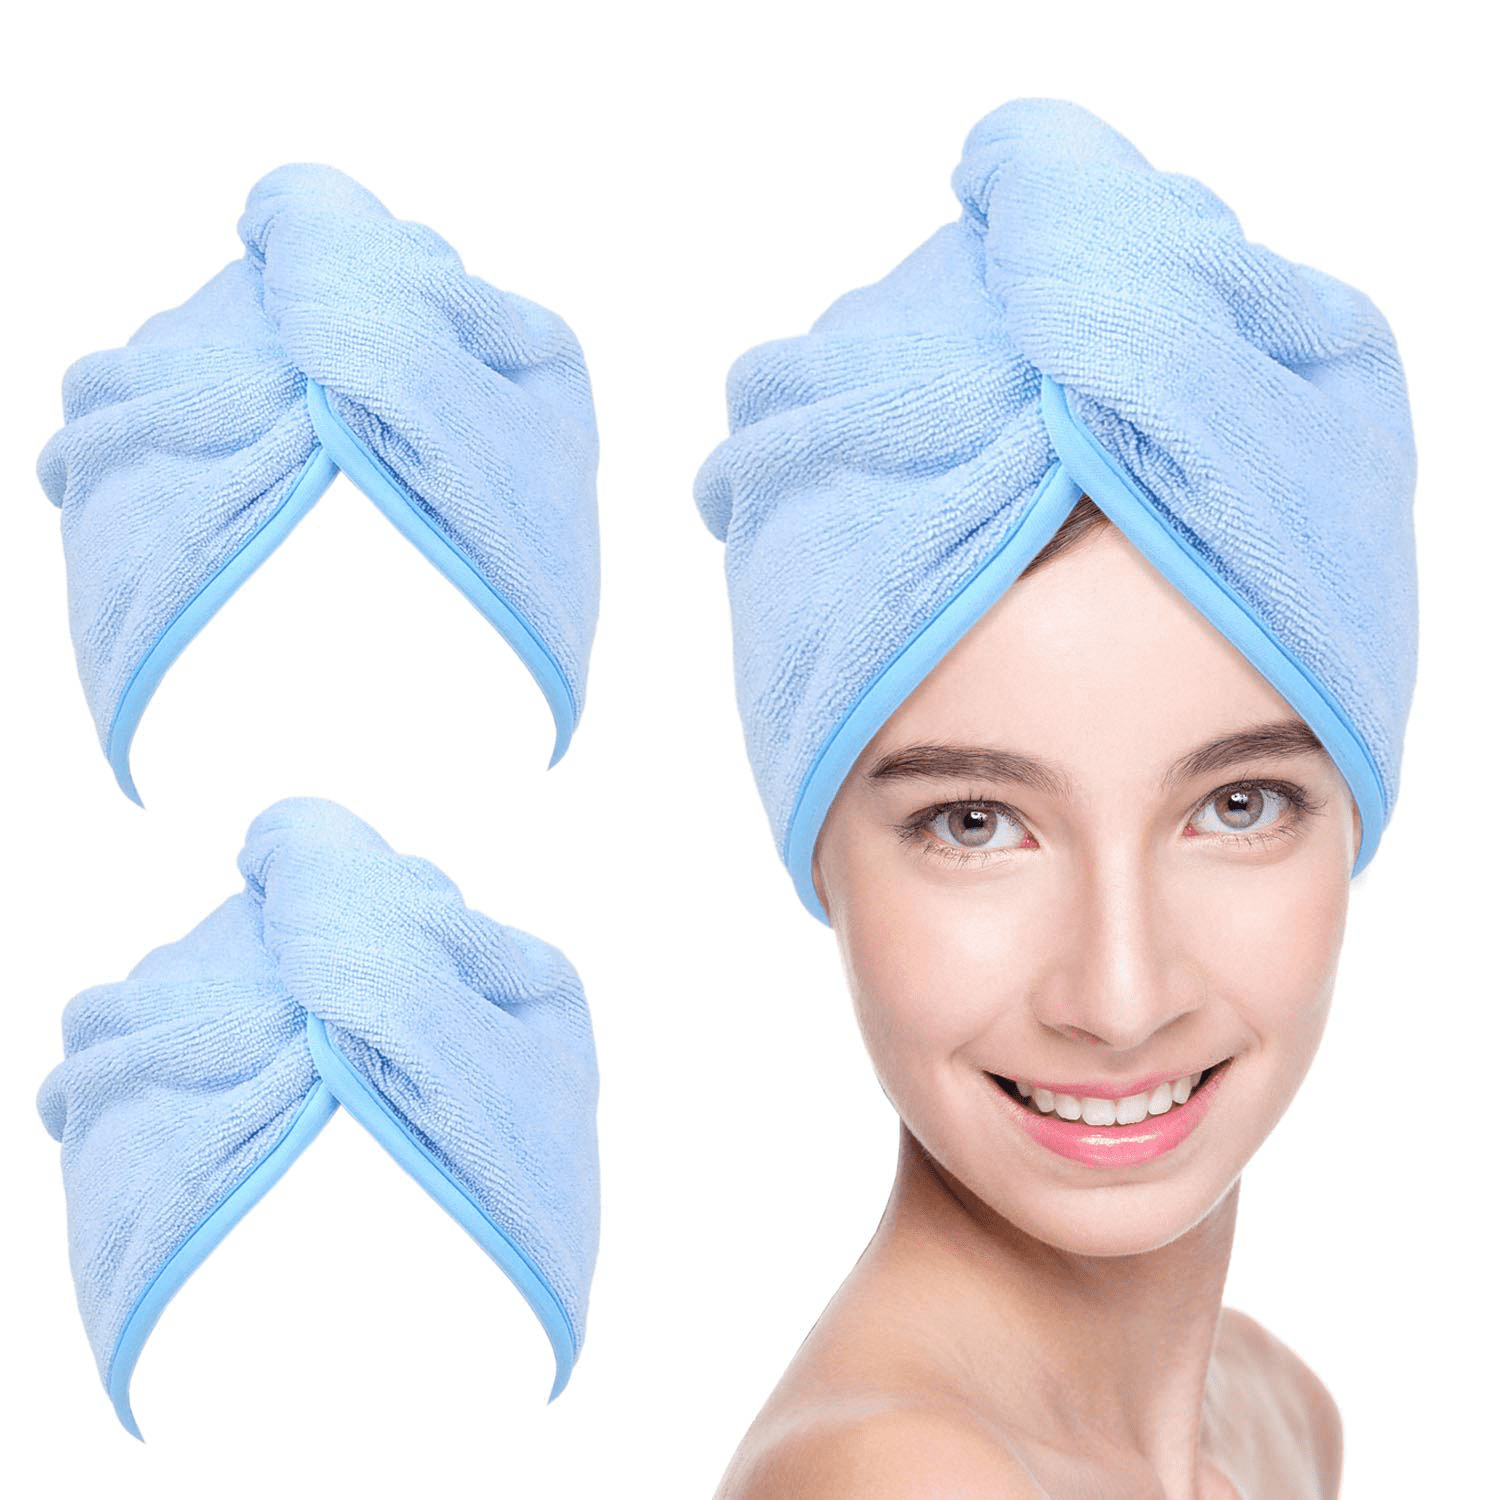 Youlertex Microfiber Hair Towel Wrap For Women Pack Inch X